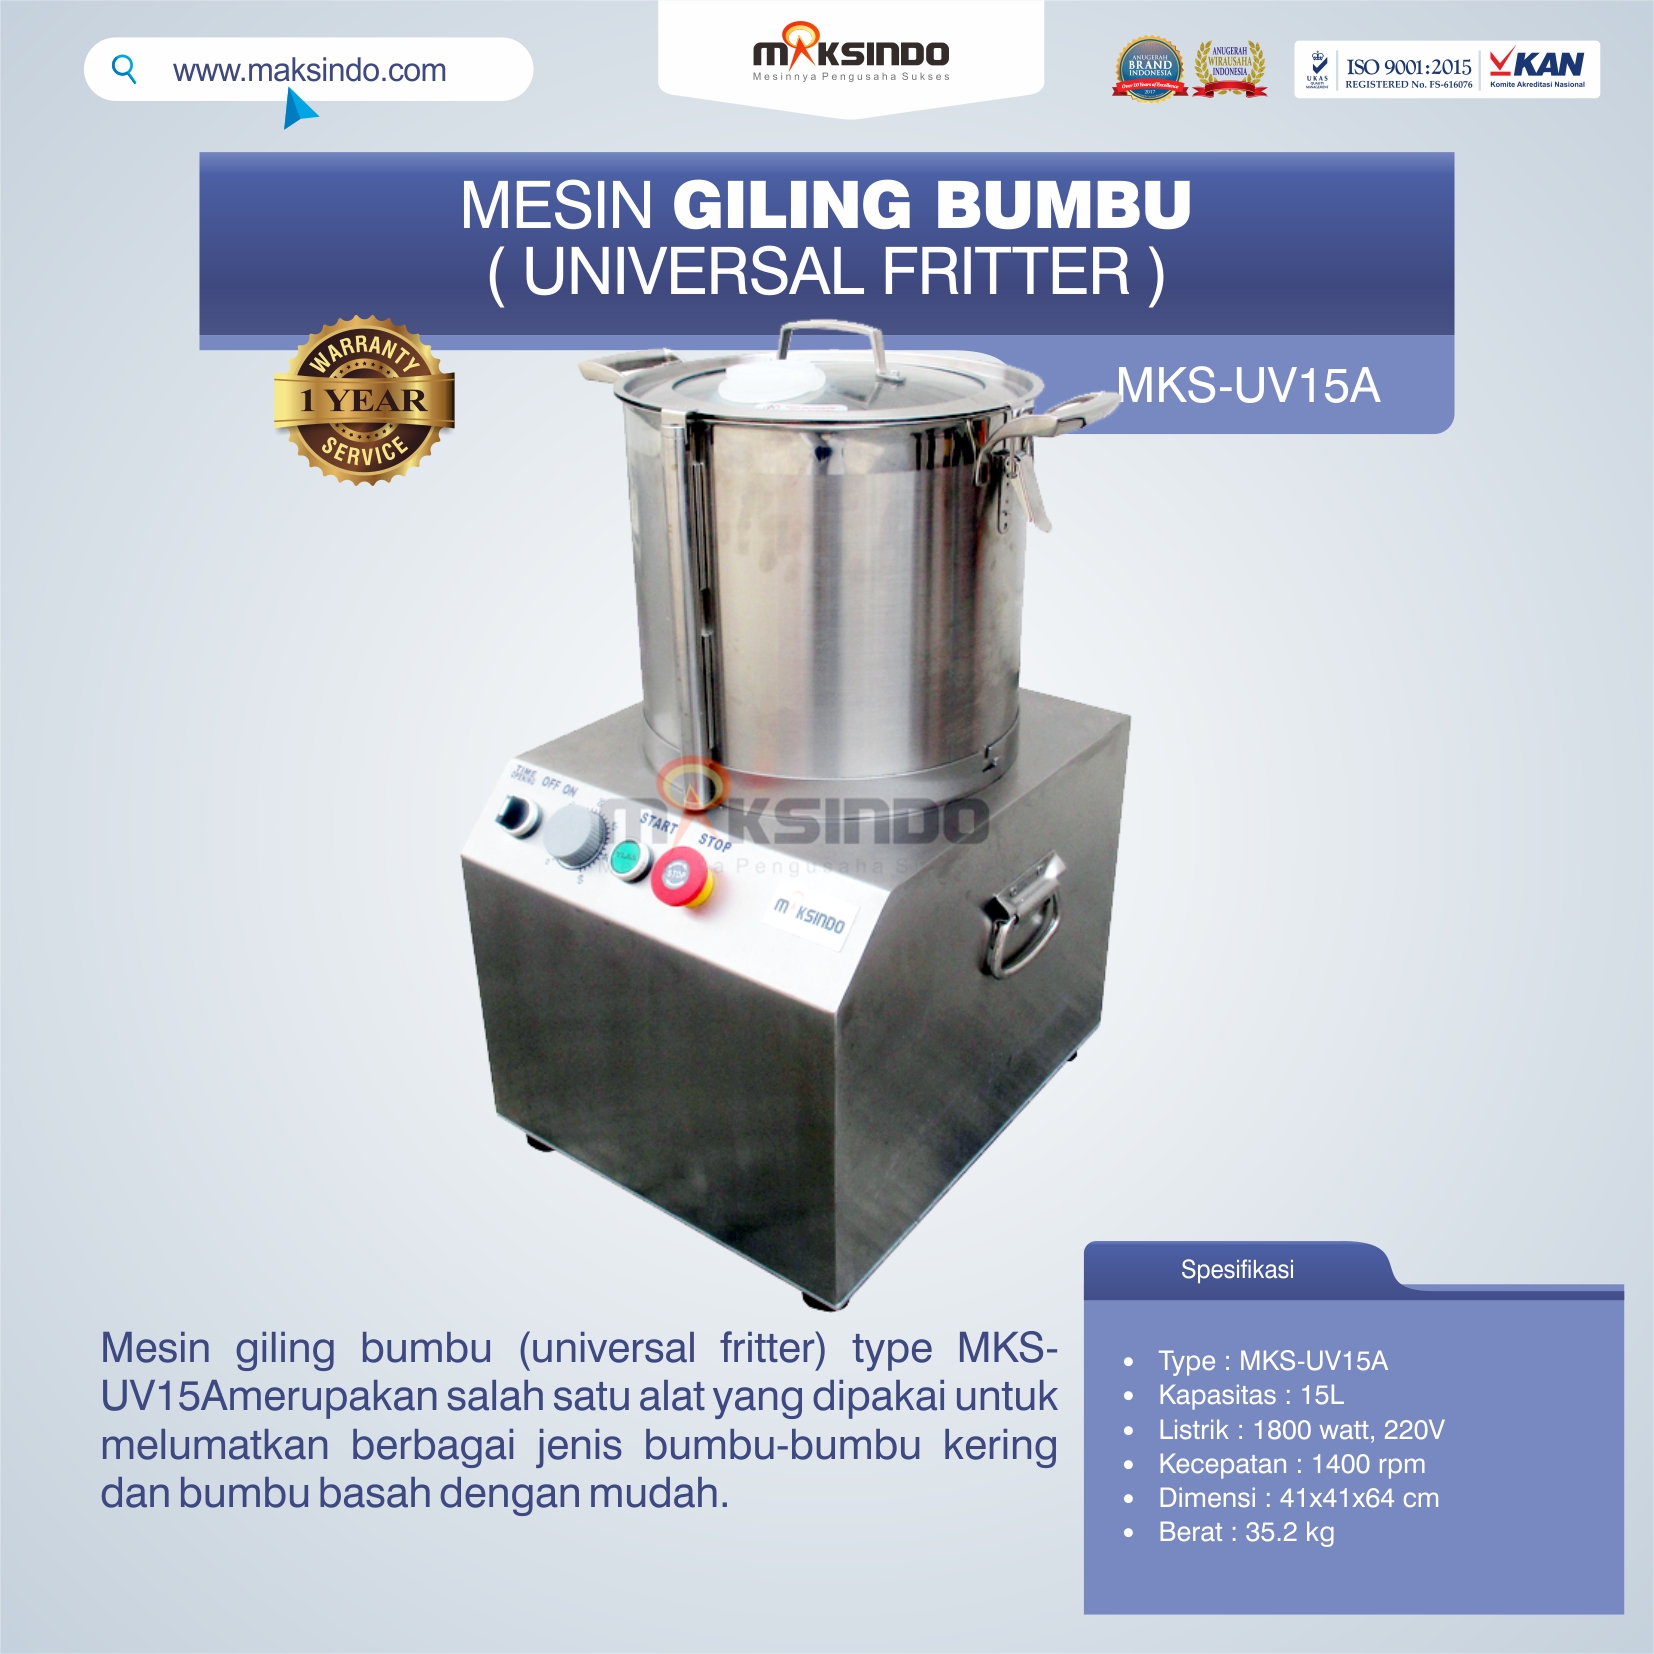 Jual Mesin Giling Bumbu (Universal Fritter) MKS-UV15A di Tangerang